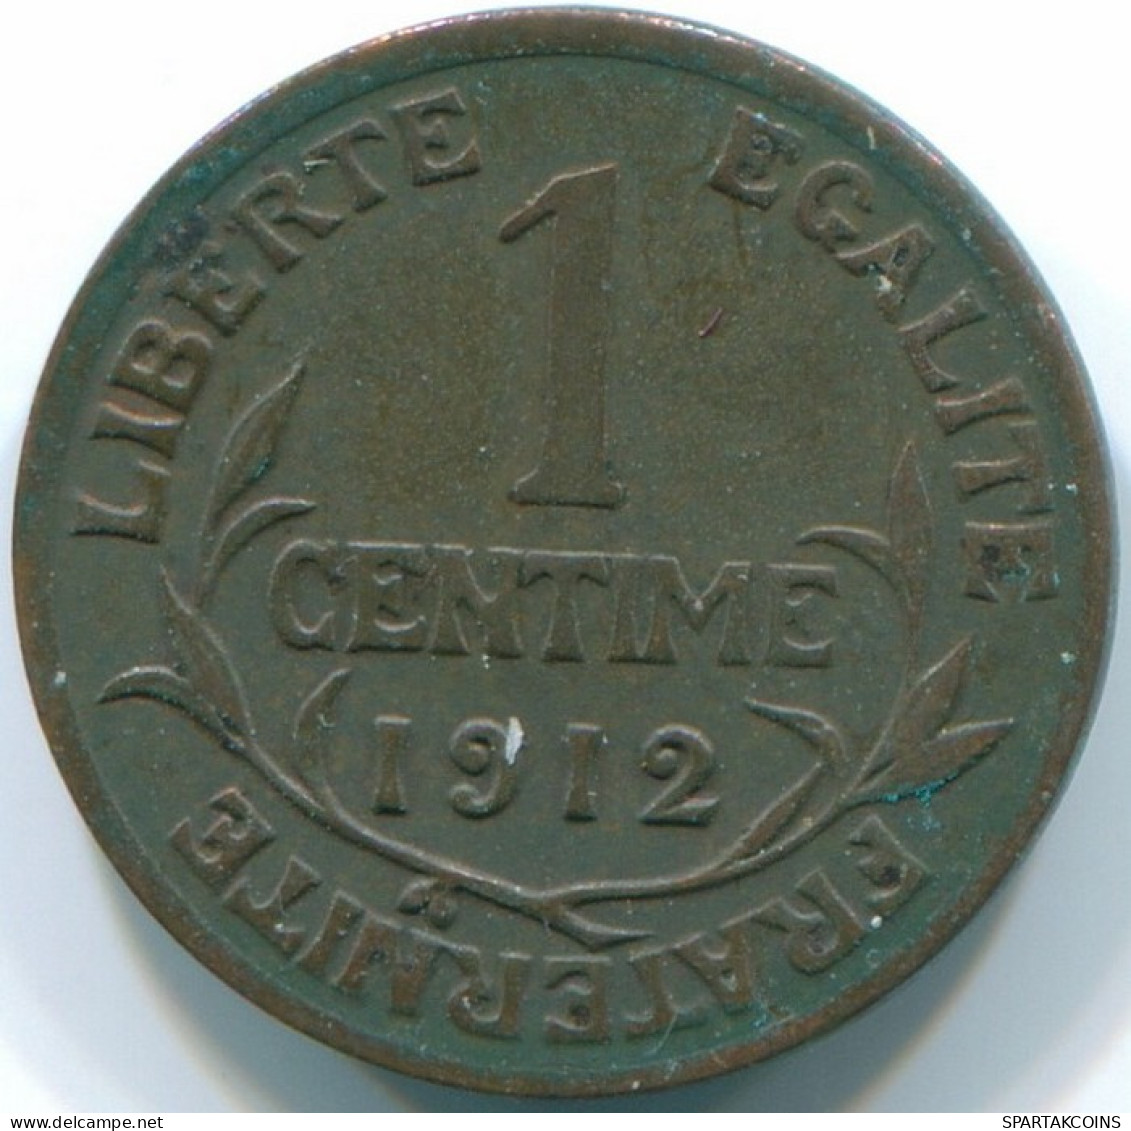 1 CENTIME 1912 FRANCE Coin Daniel-Dupuis XF #FR1212.8 - 1 Centime